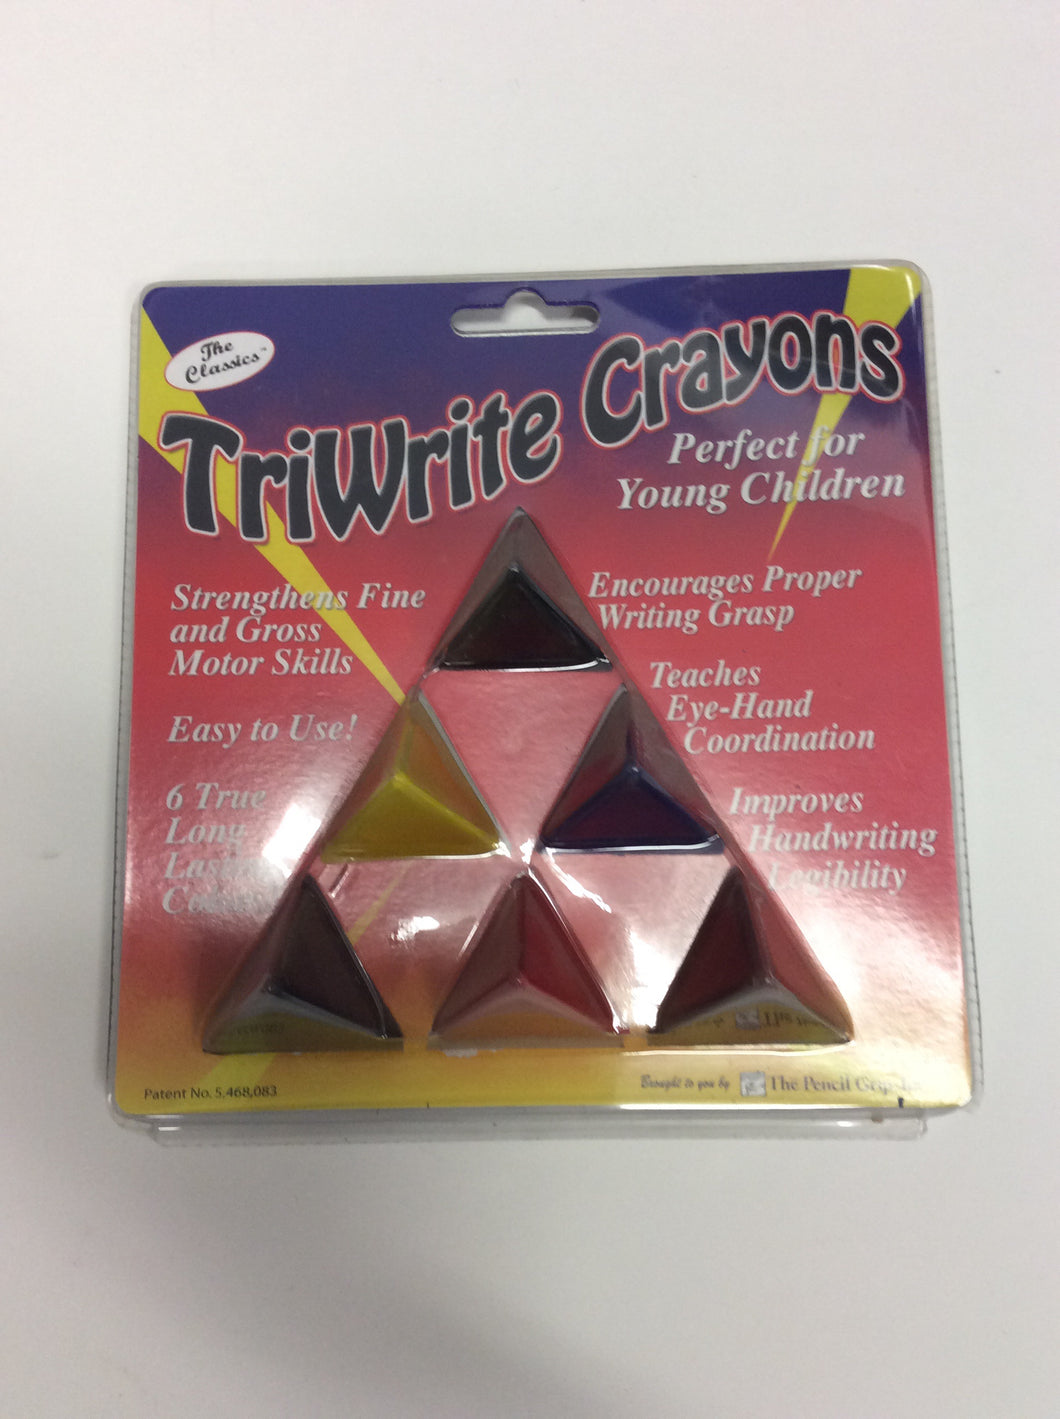 Triwrite crayons